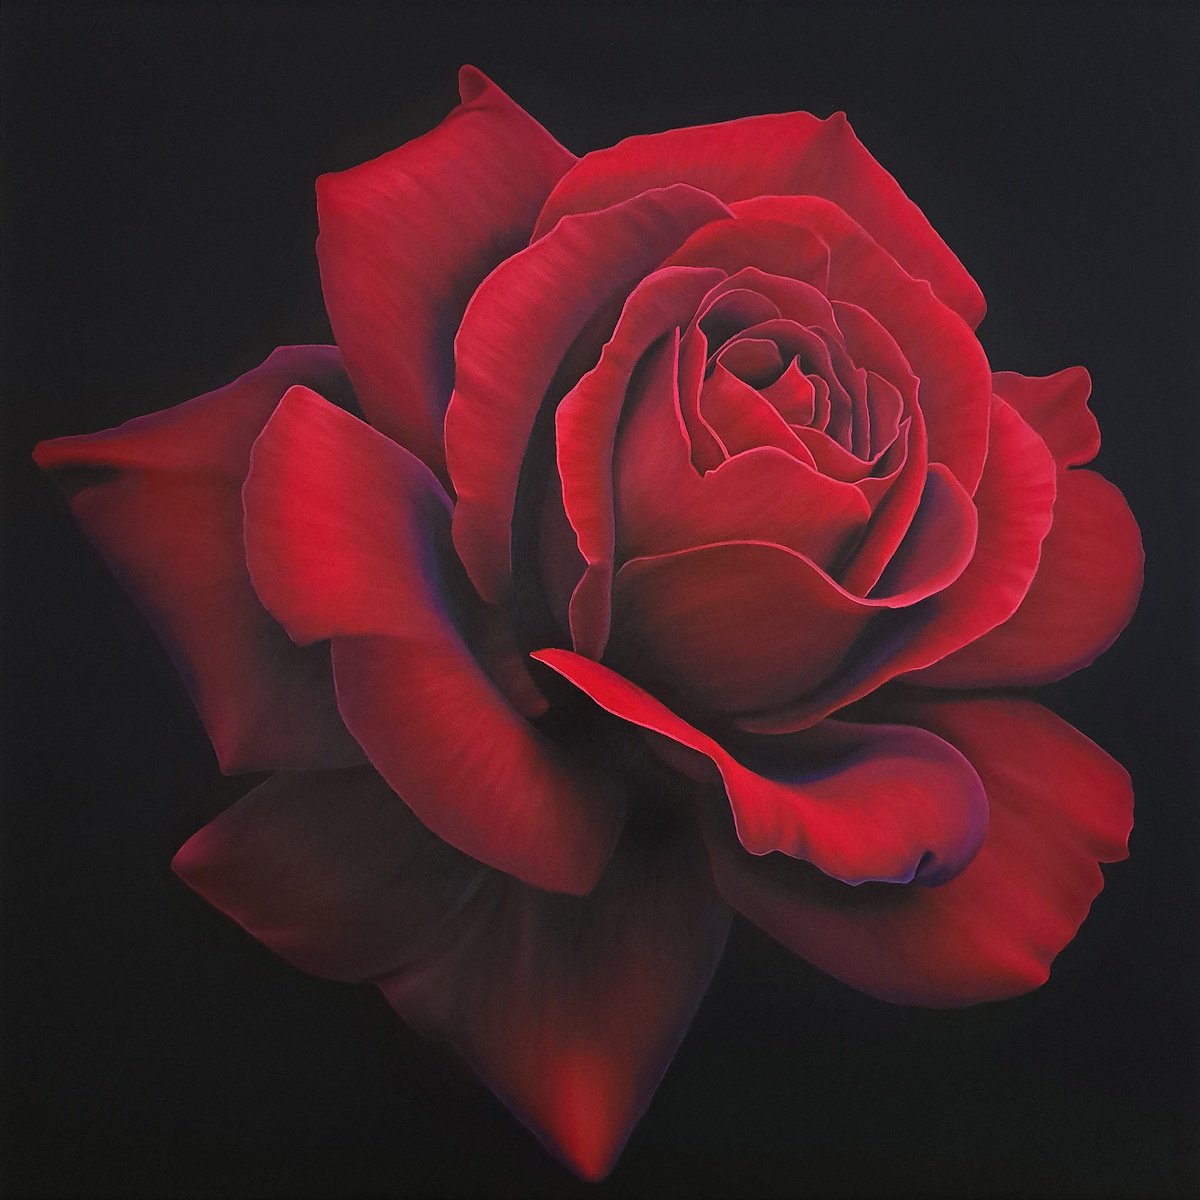 Red rose, on black background by Anna Steshenko